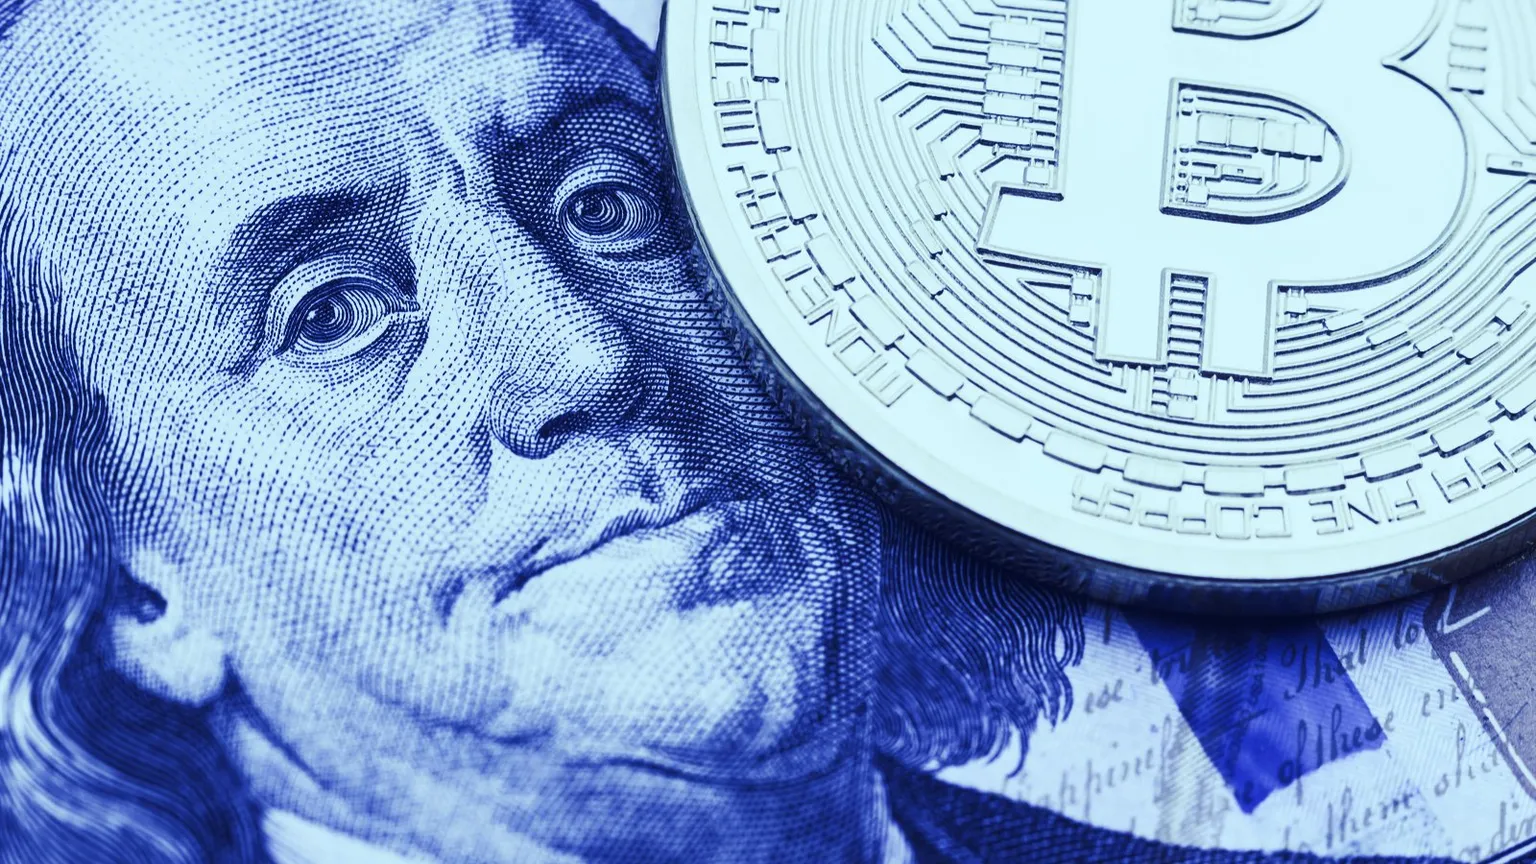 Un Bitcoin en un billete de 100 dólares. (Imagen: Shutterstock)